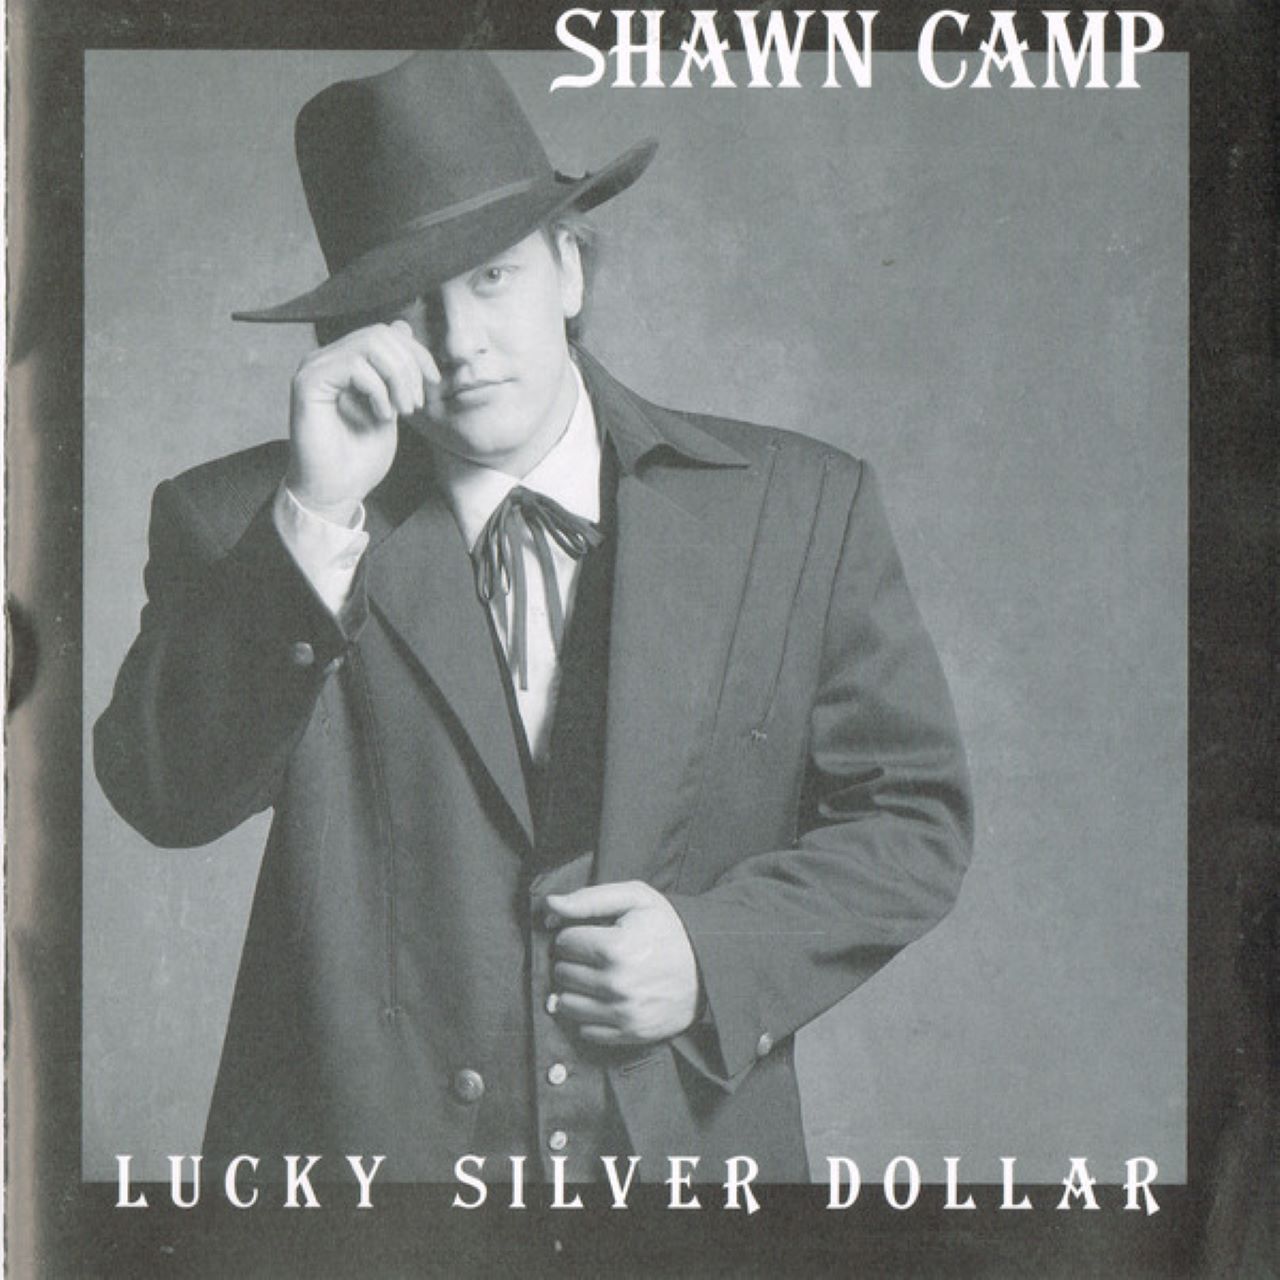 Shawn Camp - Lucky Silver Dollar cover album